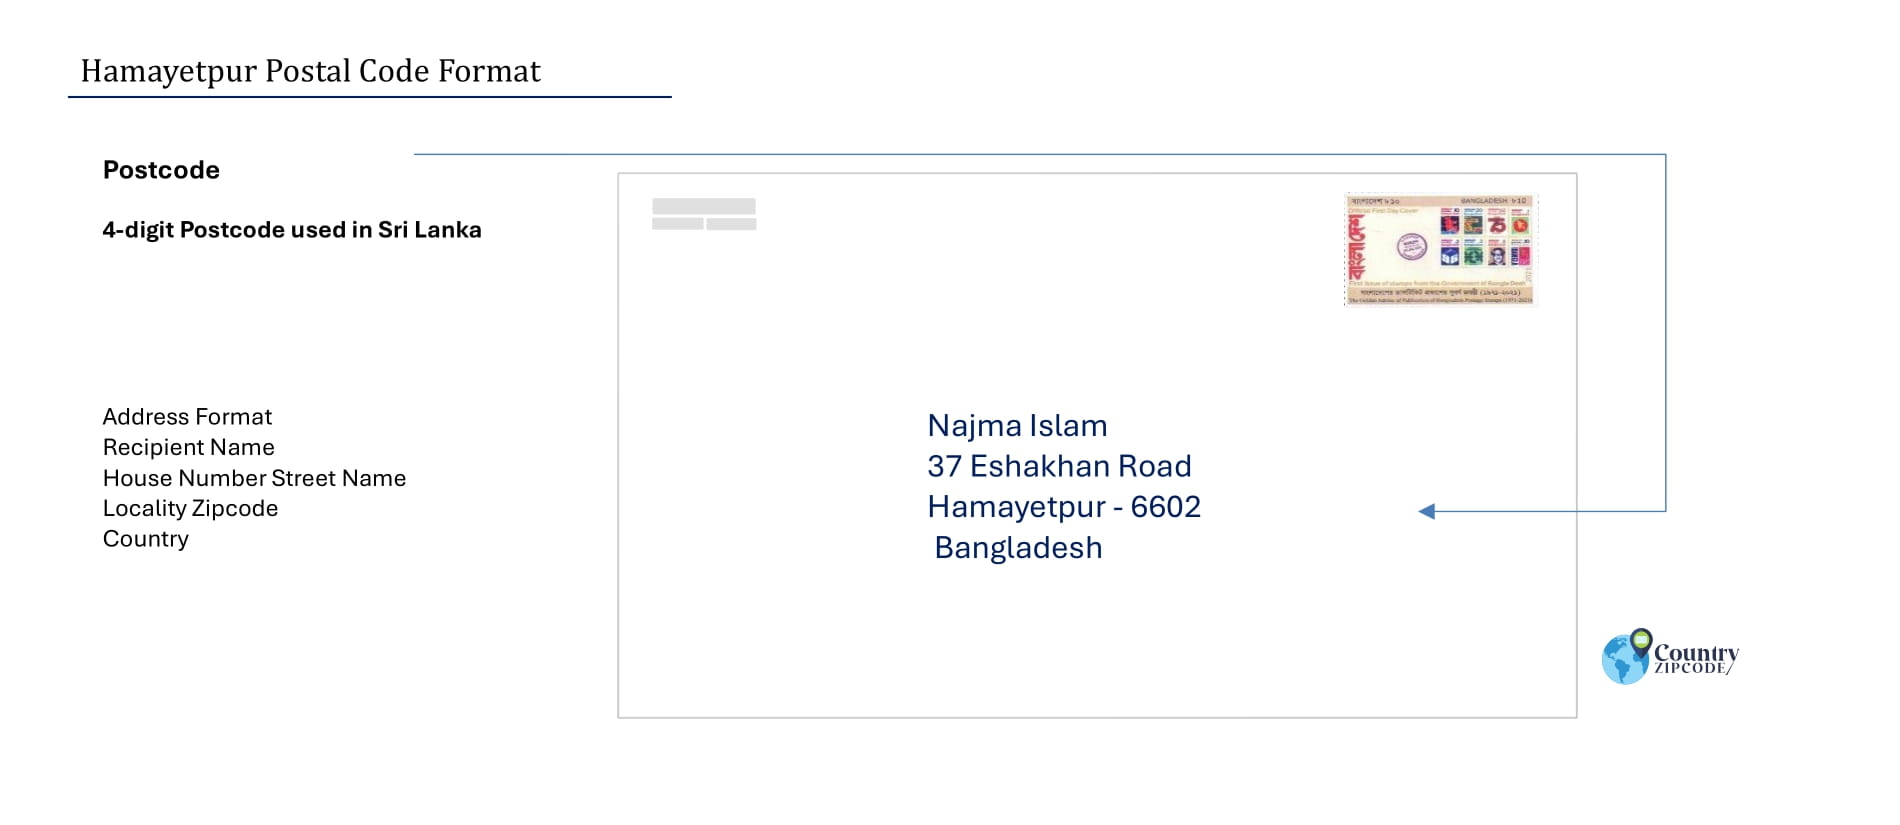 Hamayetpur Postal code format